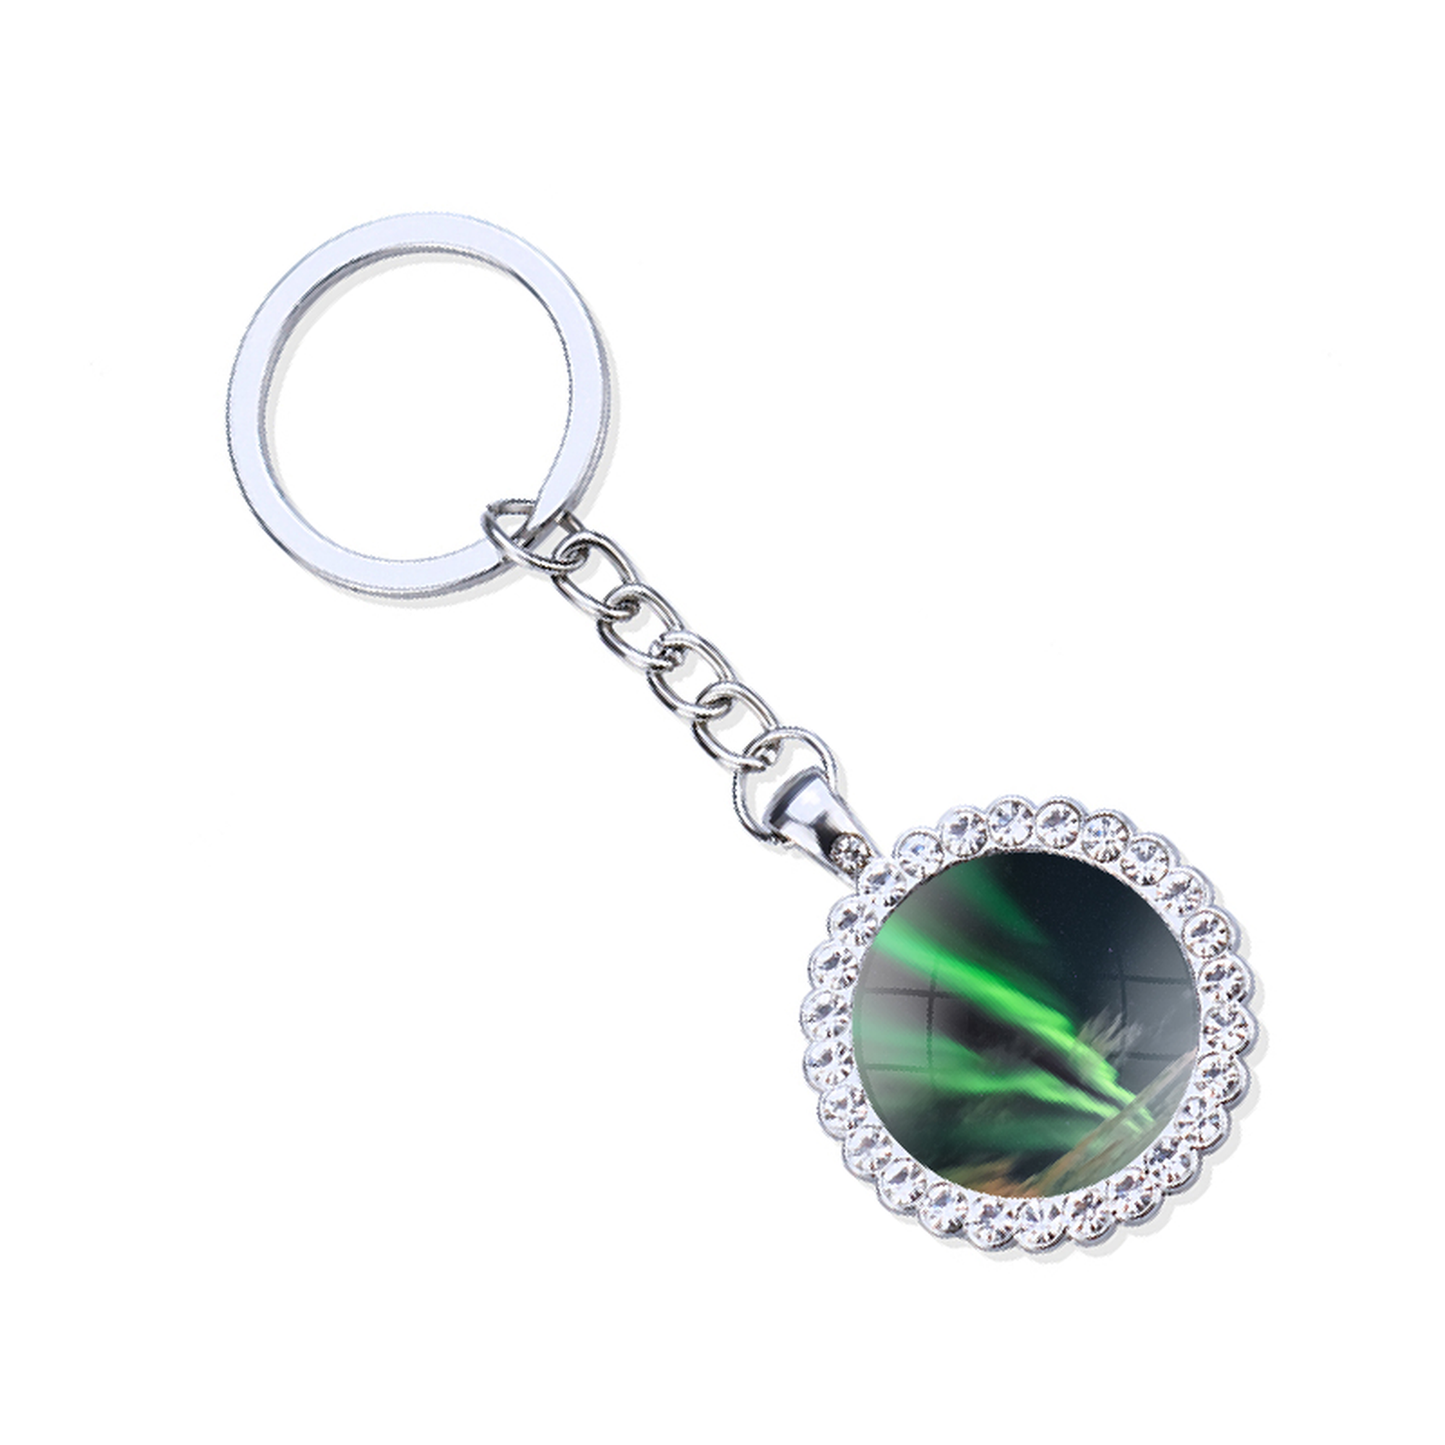 Aurora Borealis Silver Keyring - Northern Light Jewelry - Rhinestones Glass Key Chain - Perfect Aurora Lovers Gift 5